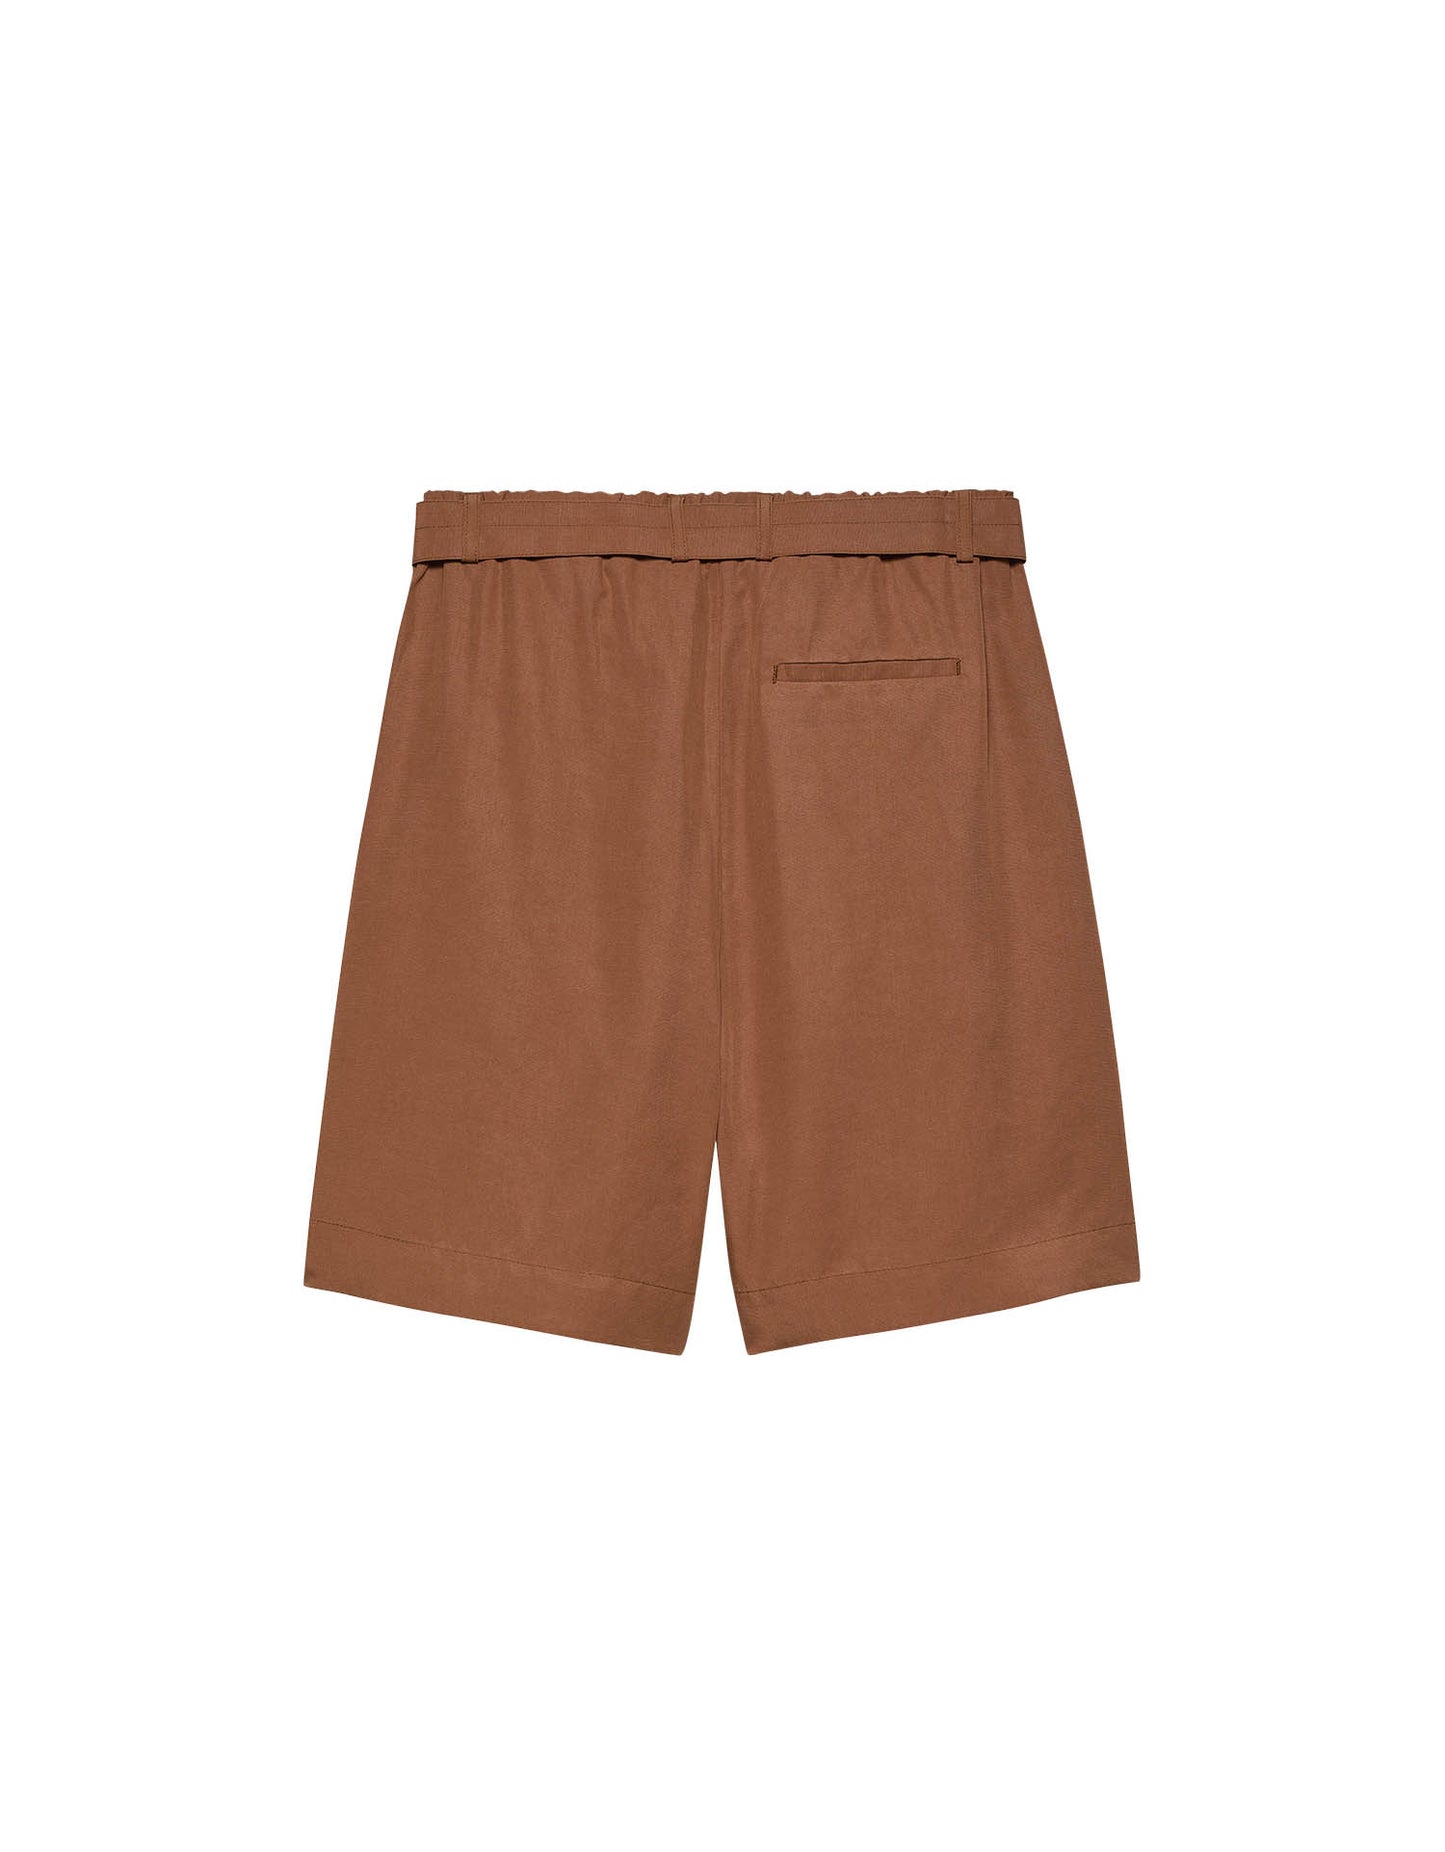 Catwalk Junkie - Tailored Shorts - Copper